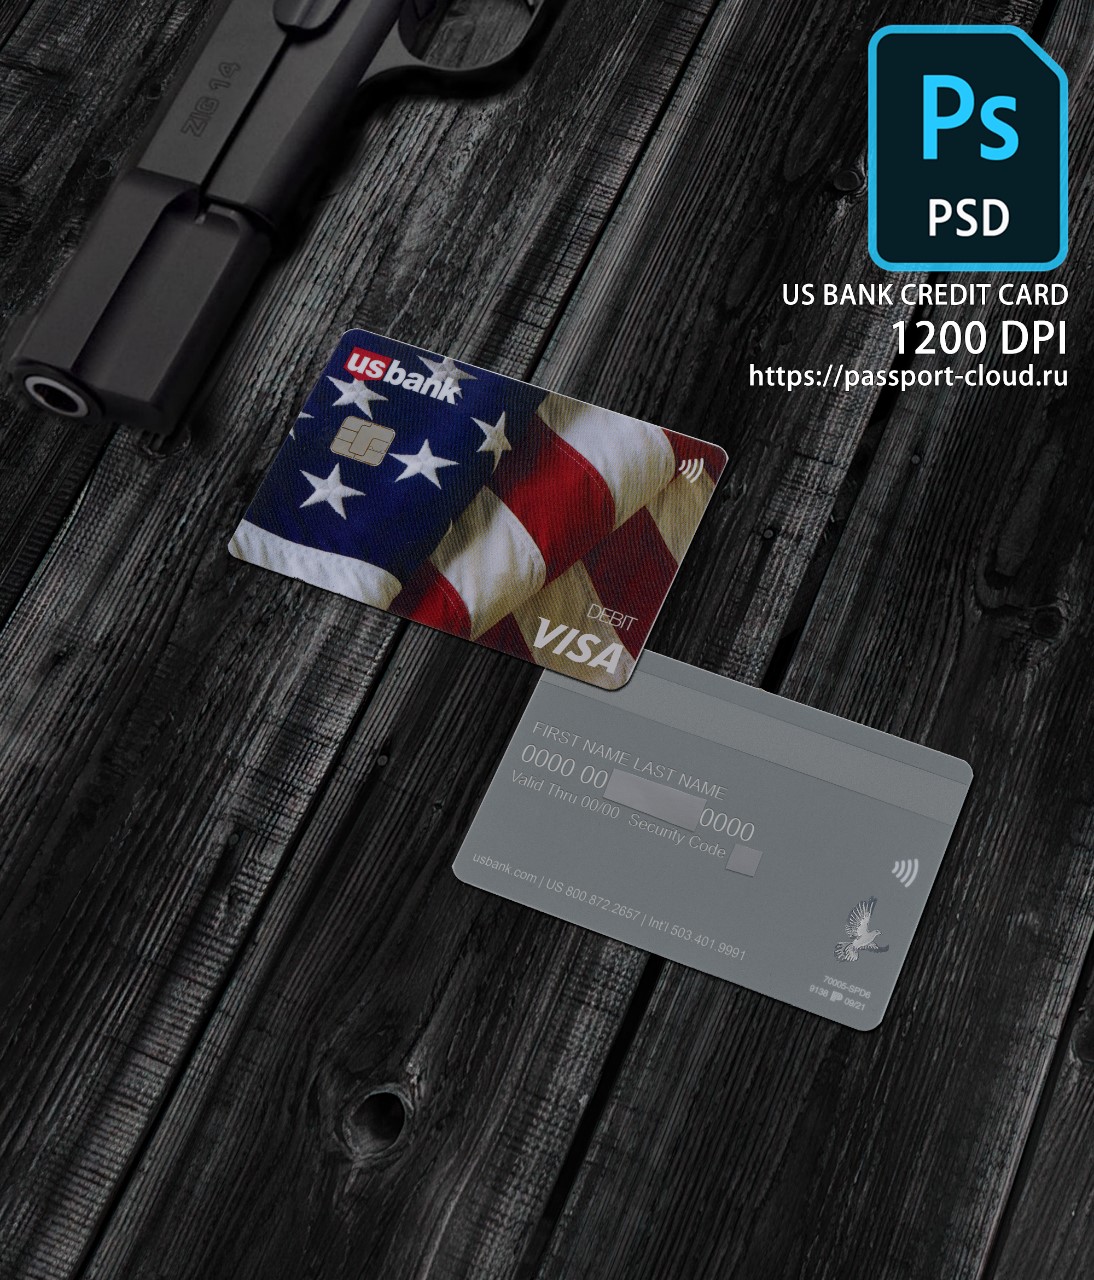 US Bank Credit Card PSD1